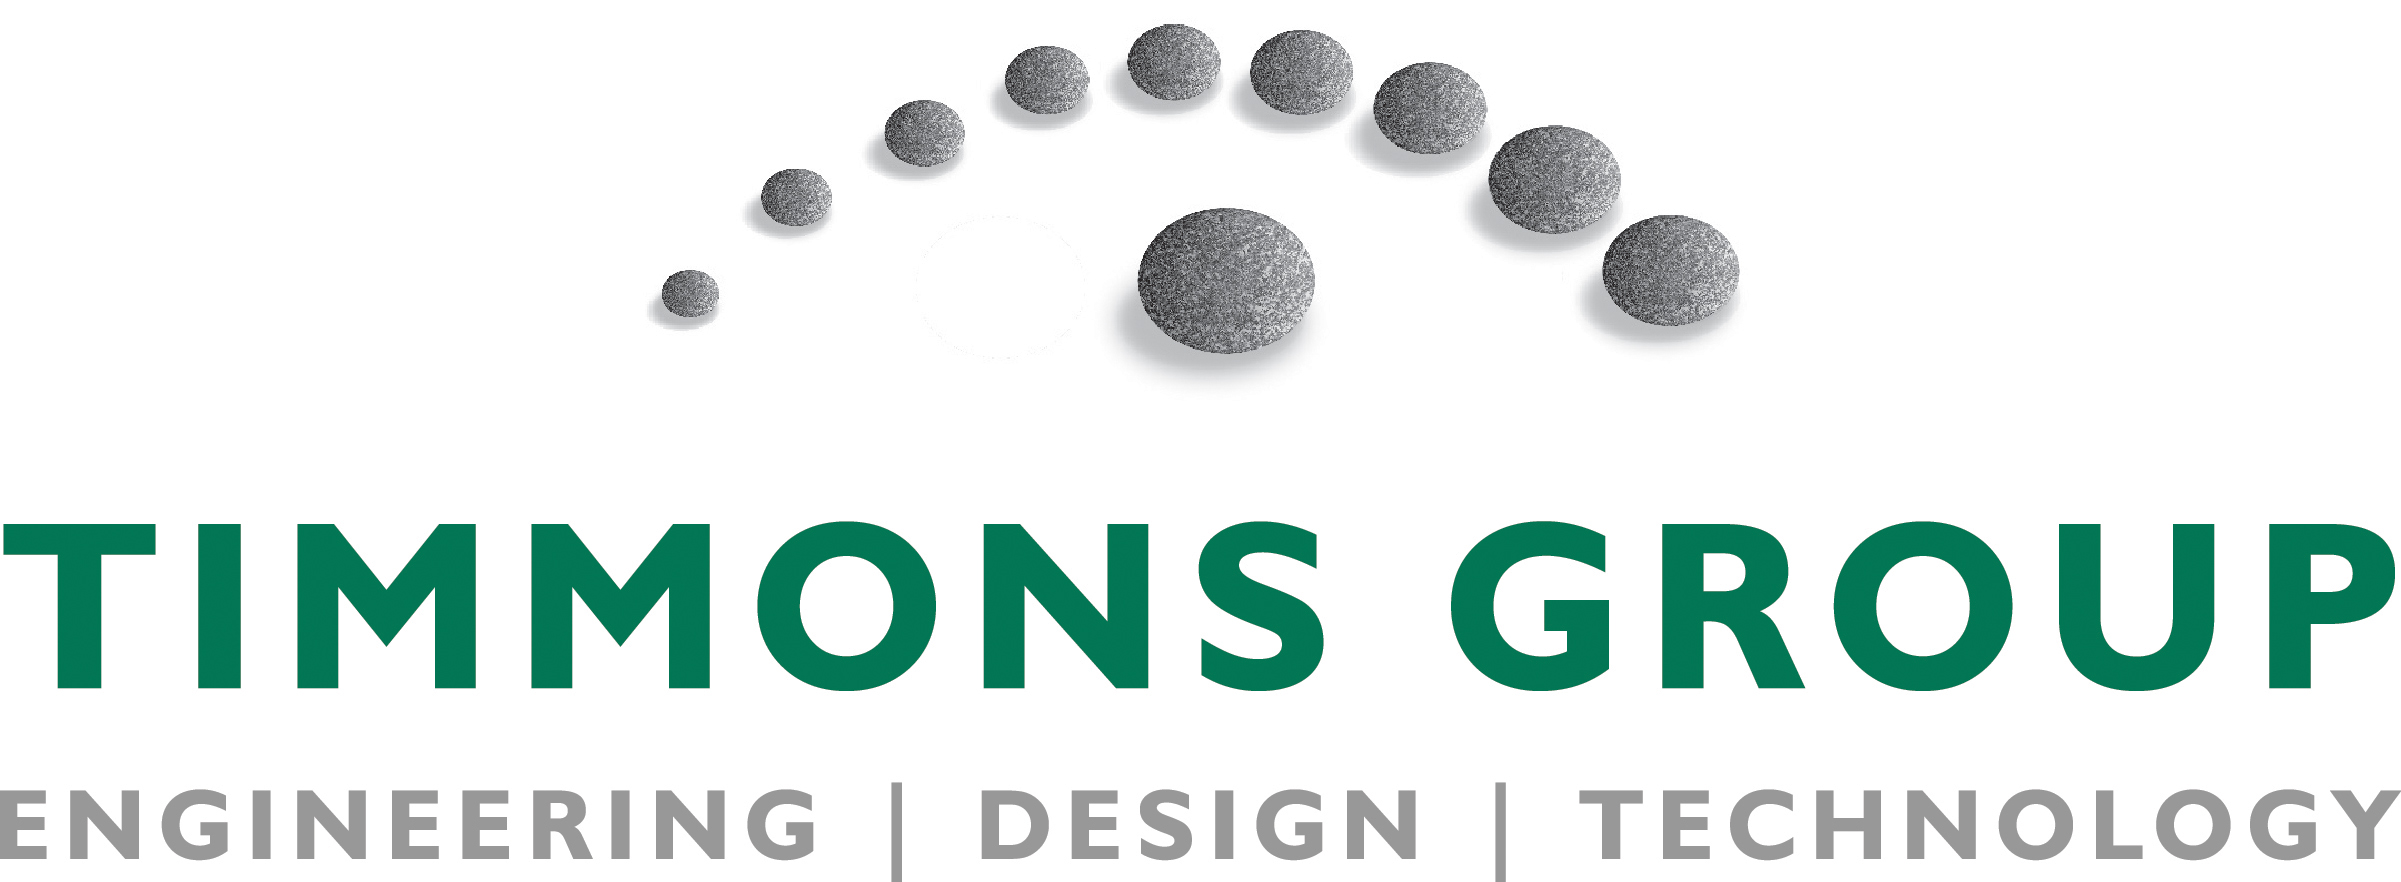 TG-Corporate-Logo-_Green-Gray_Services_EngineeringTech